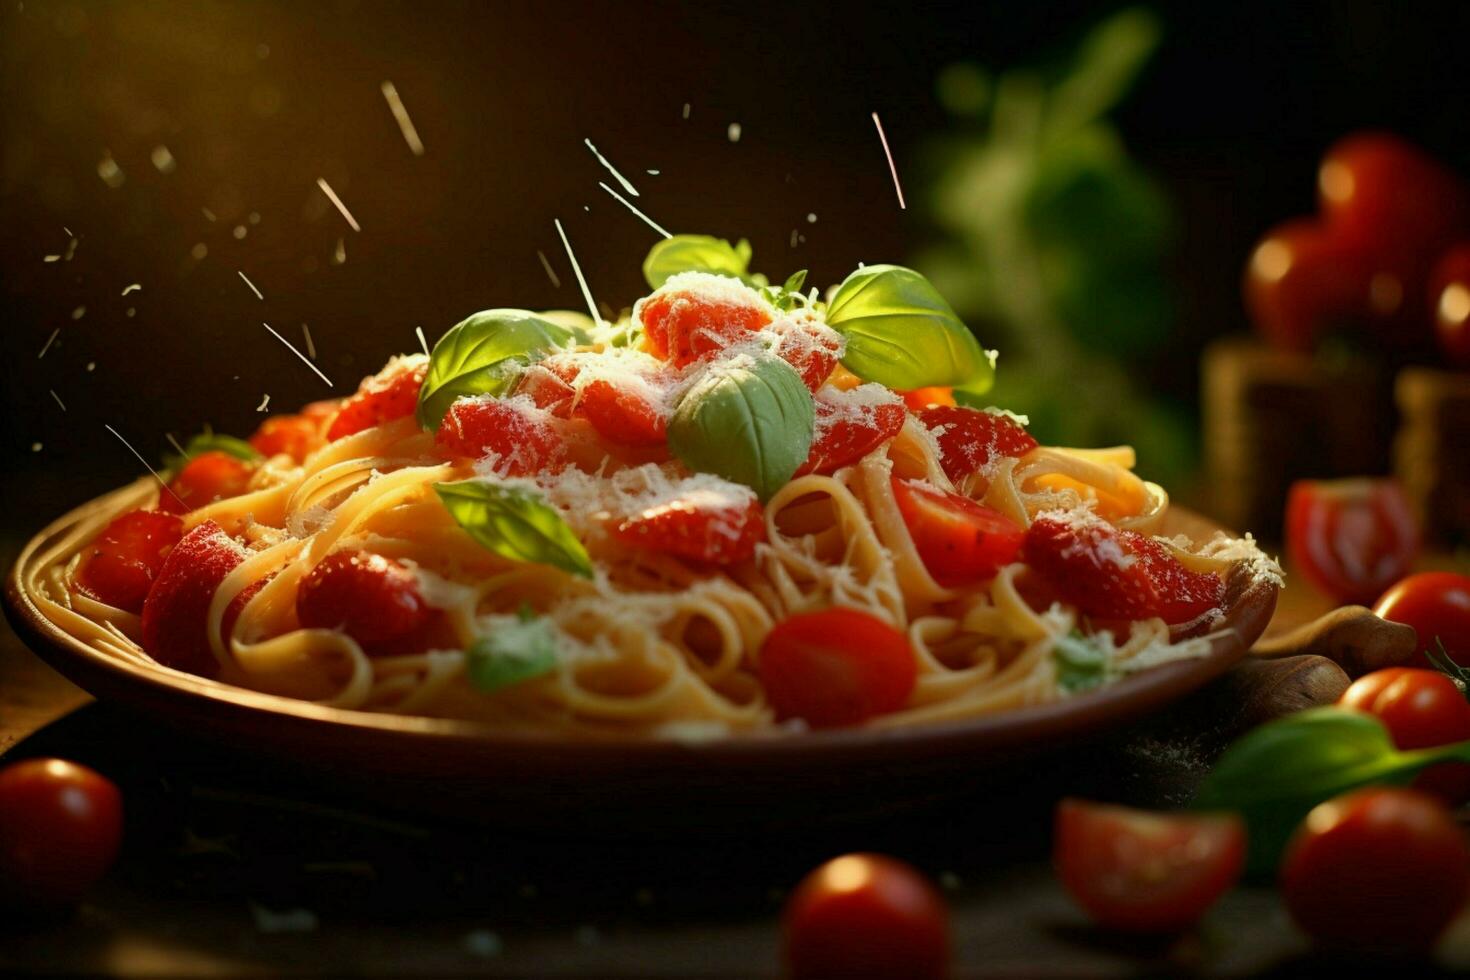 Capture the deliciousness of your favorite pasta di photo